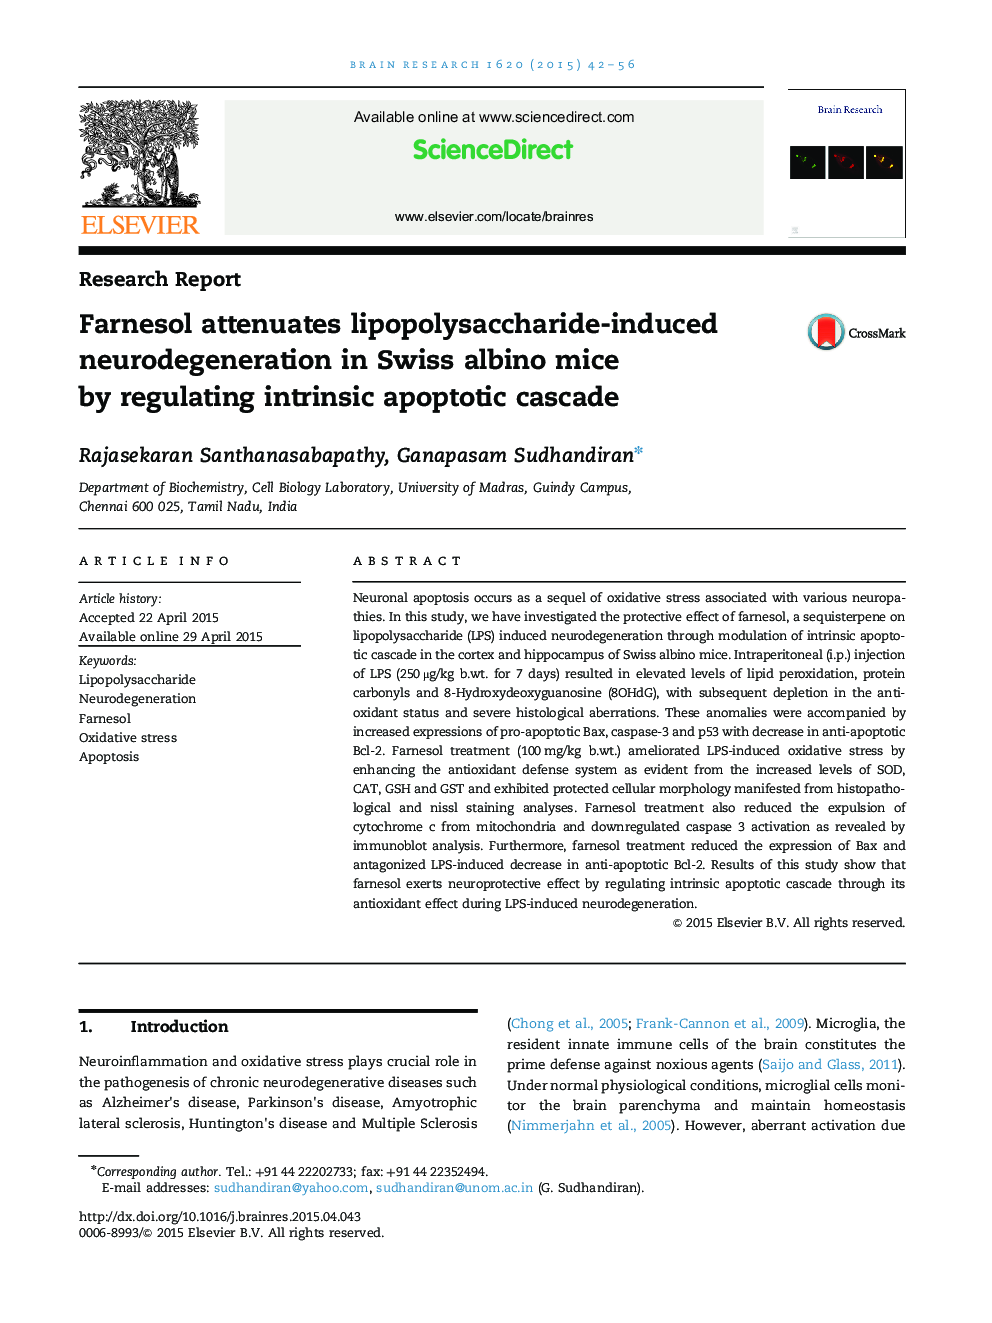 Research ReportFarnesol attenuates lipopolysaccharide-induced neurodegeneration in Swiss albino mice by regulating intrinsic apoptotic cascade